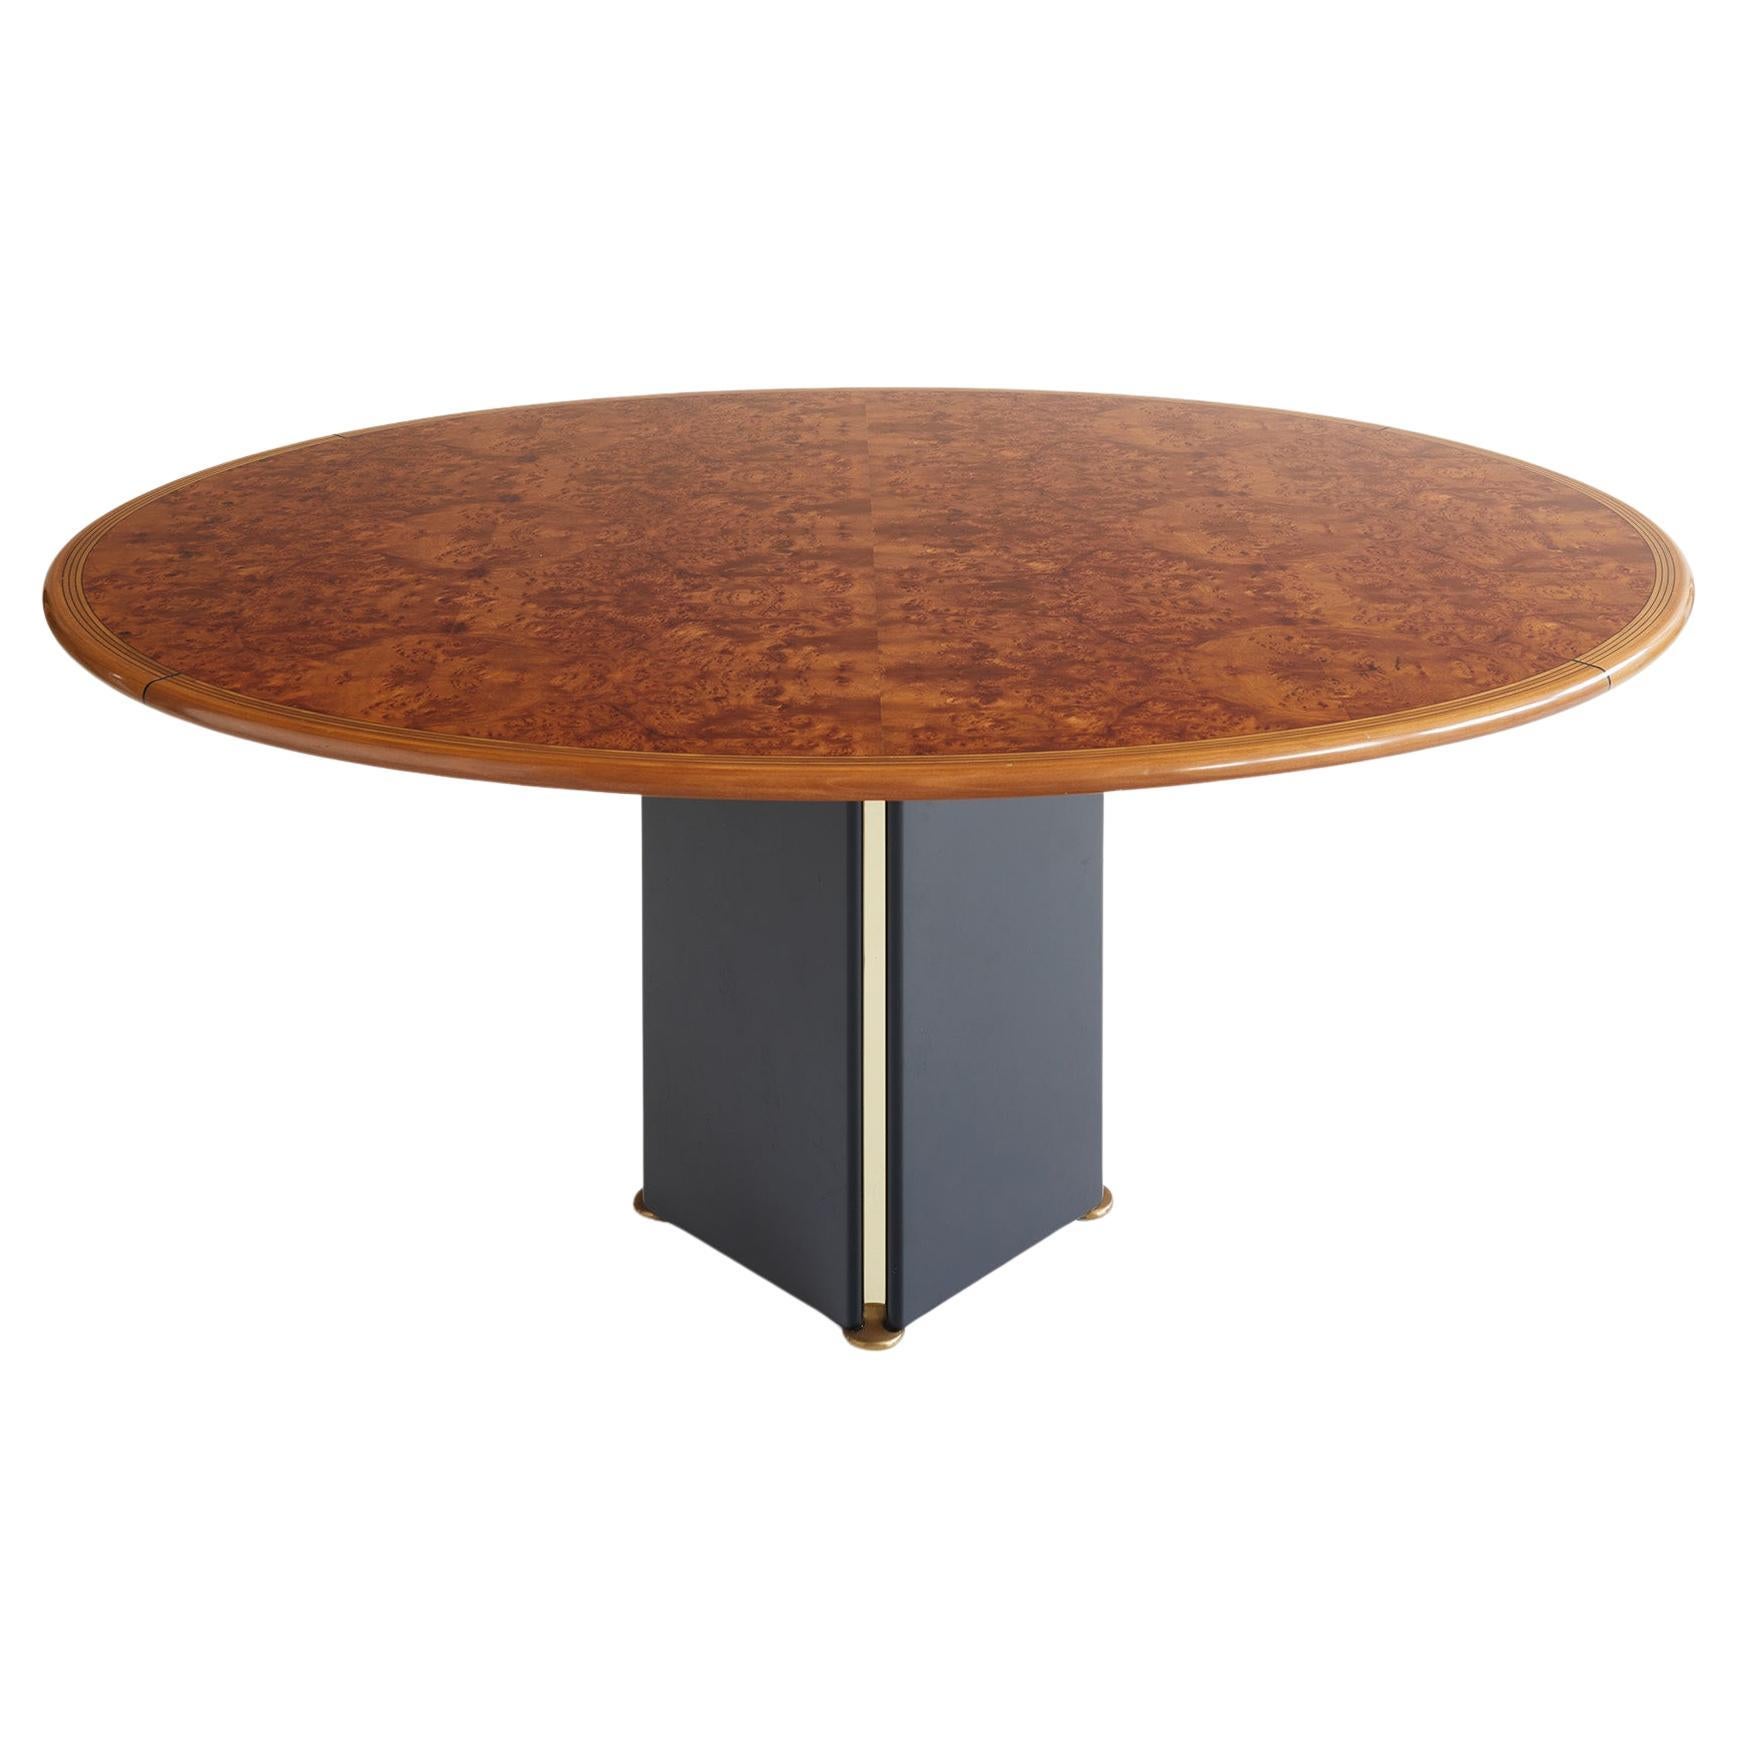 Artona oval dining table by Afra and Tobia Scarpa, ed. Maxalto 1975 For Sale